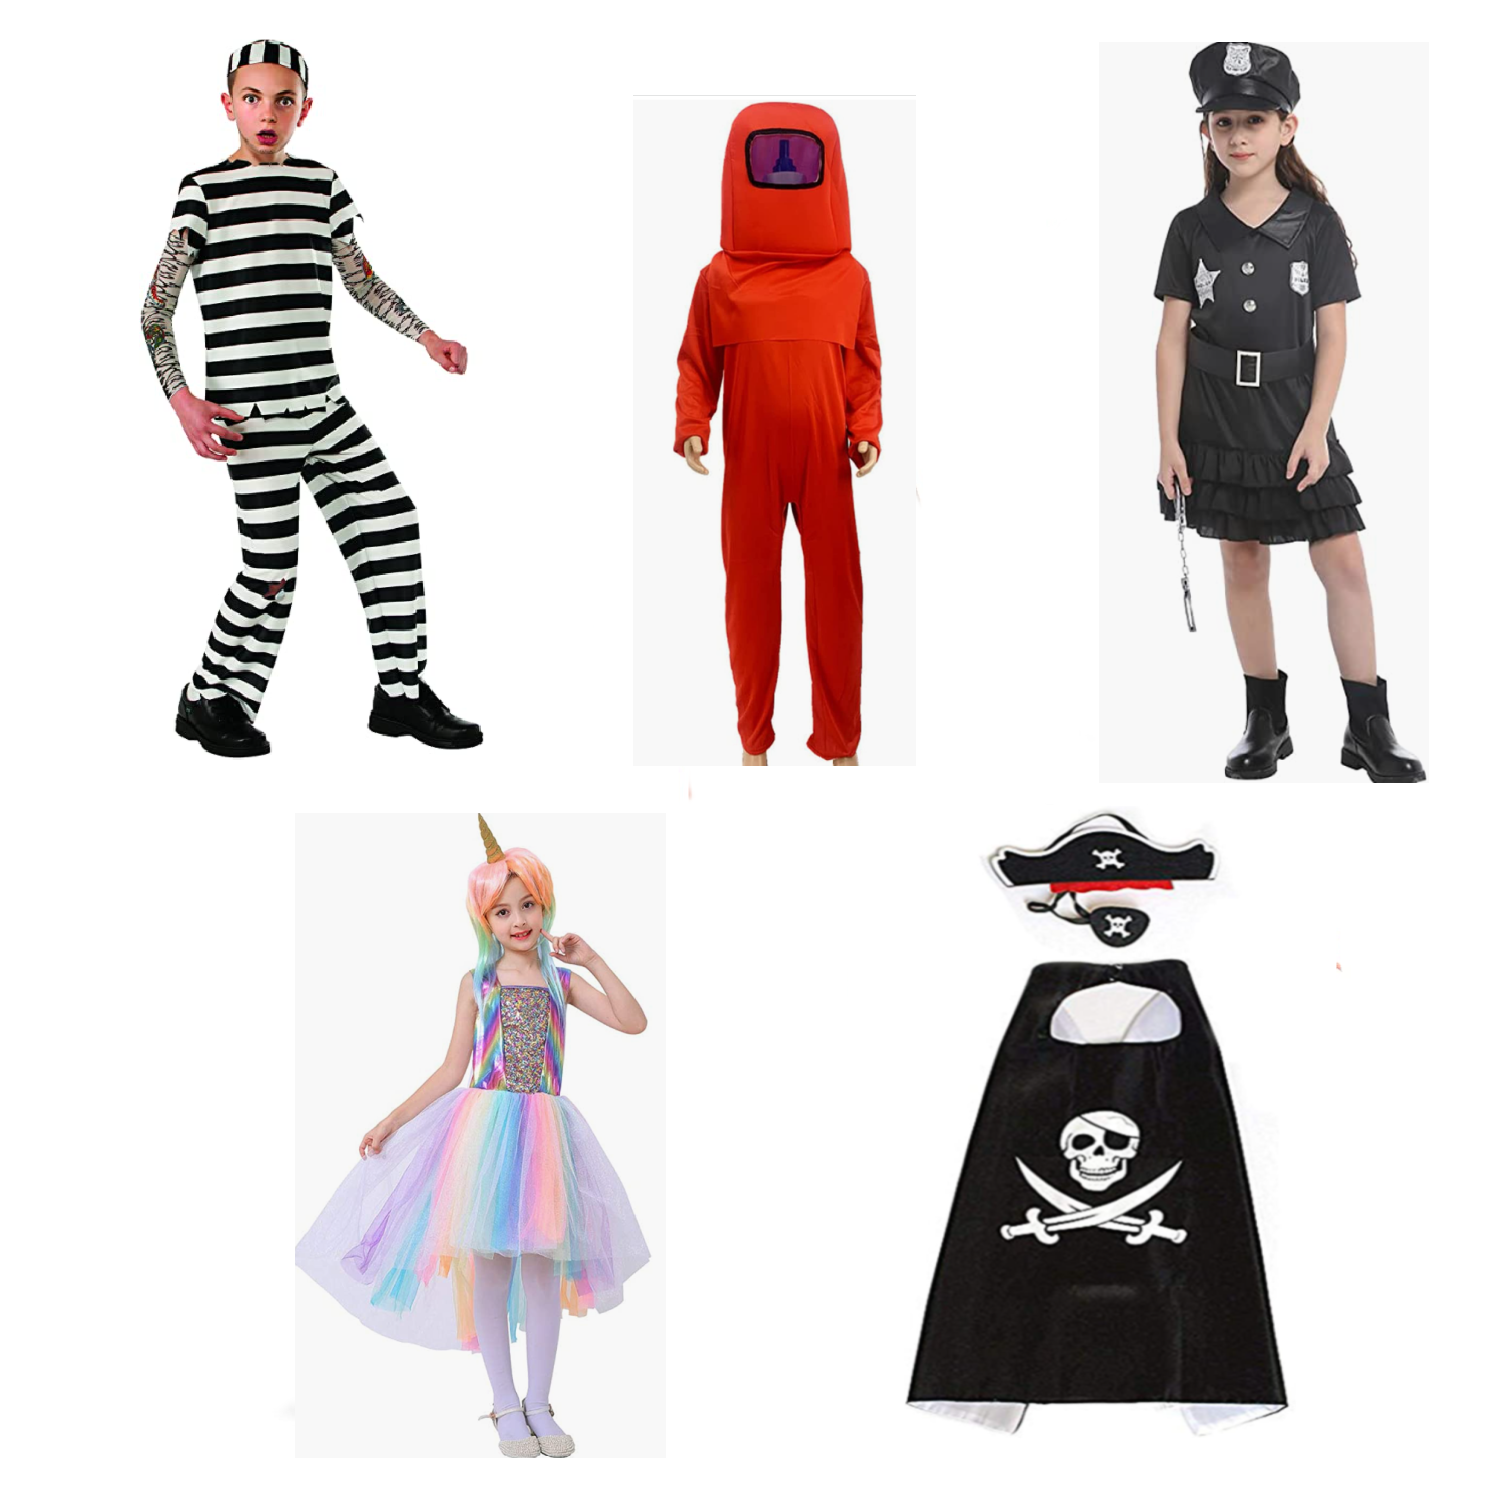 5 Halloween costumes - prisoner, astronaut, cop's dress, rainbow unicorn, and pirate's costume.